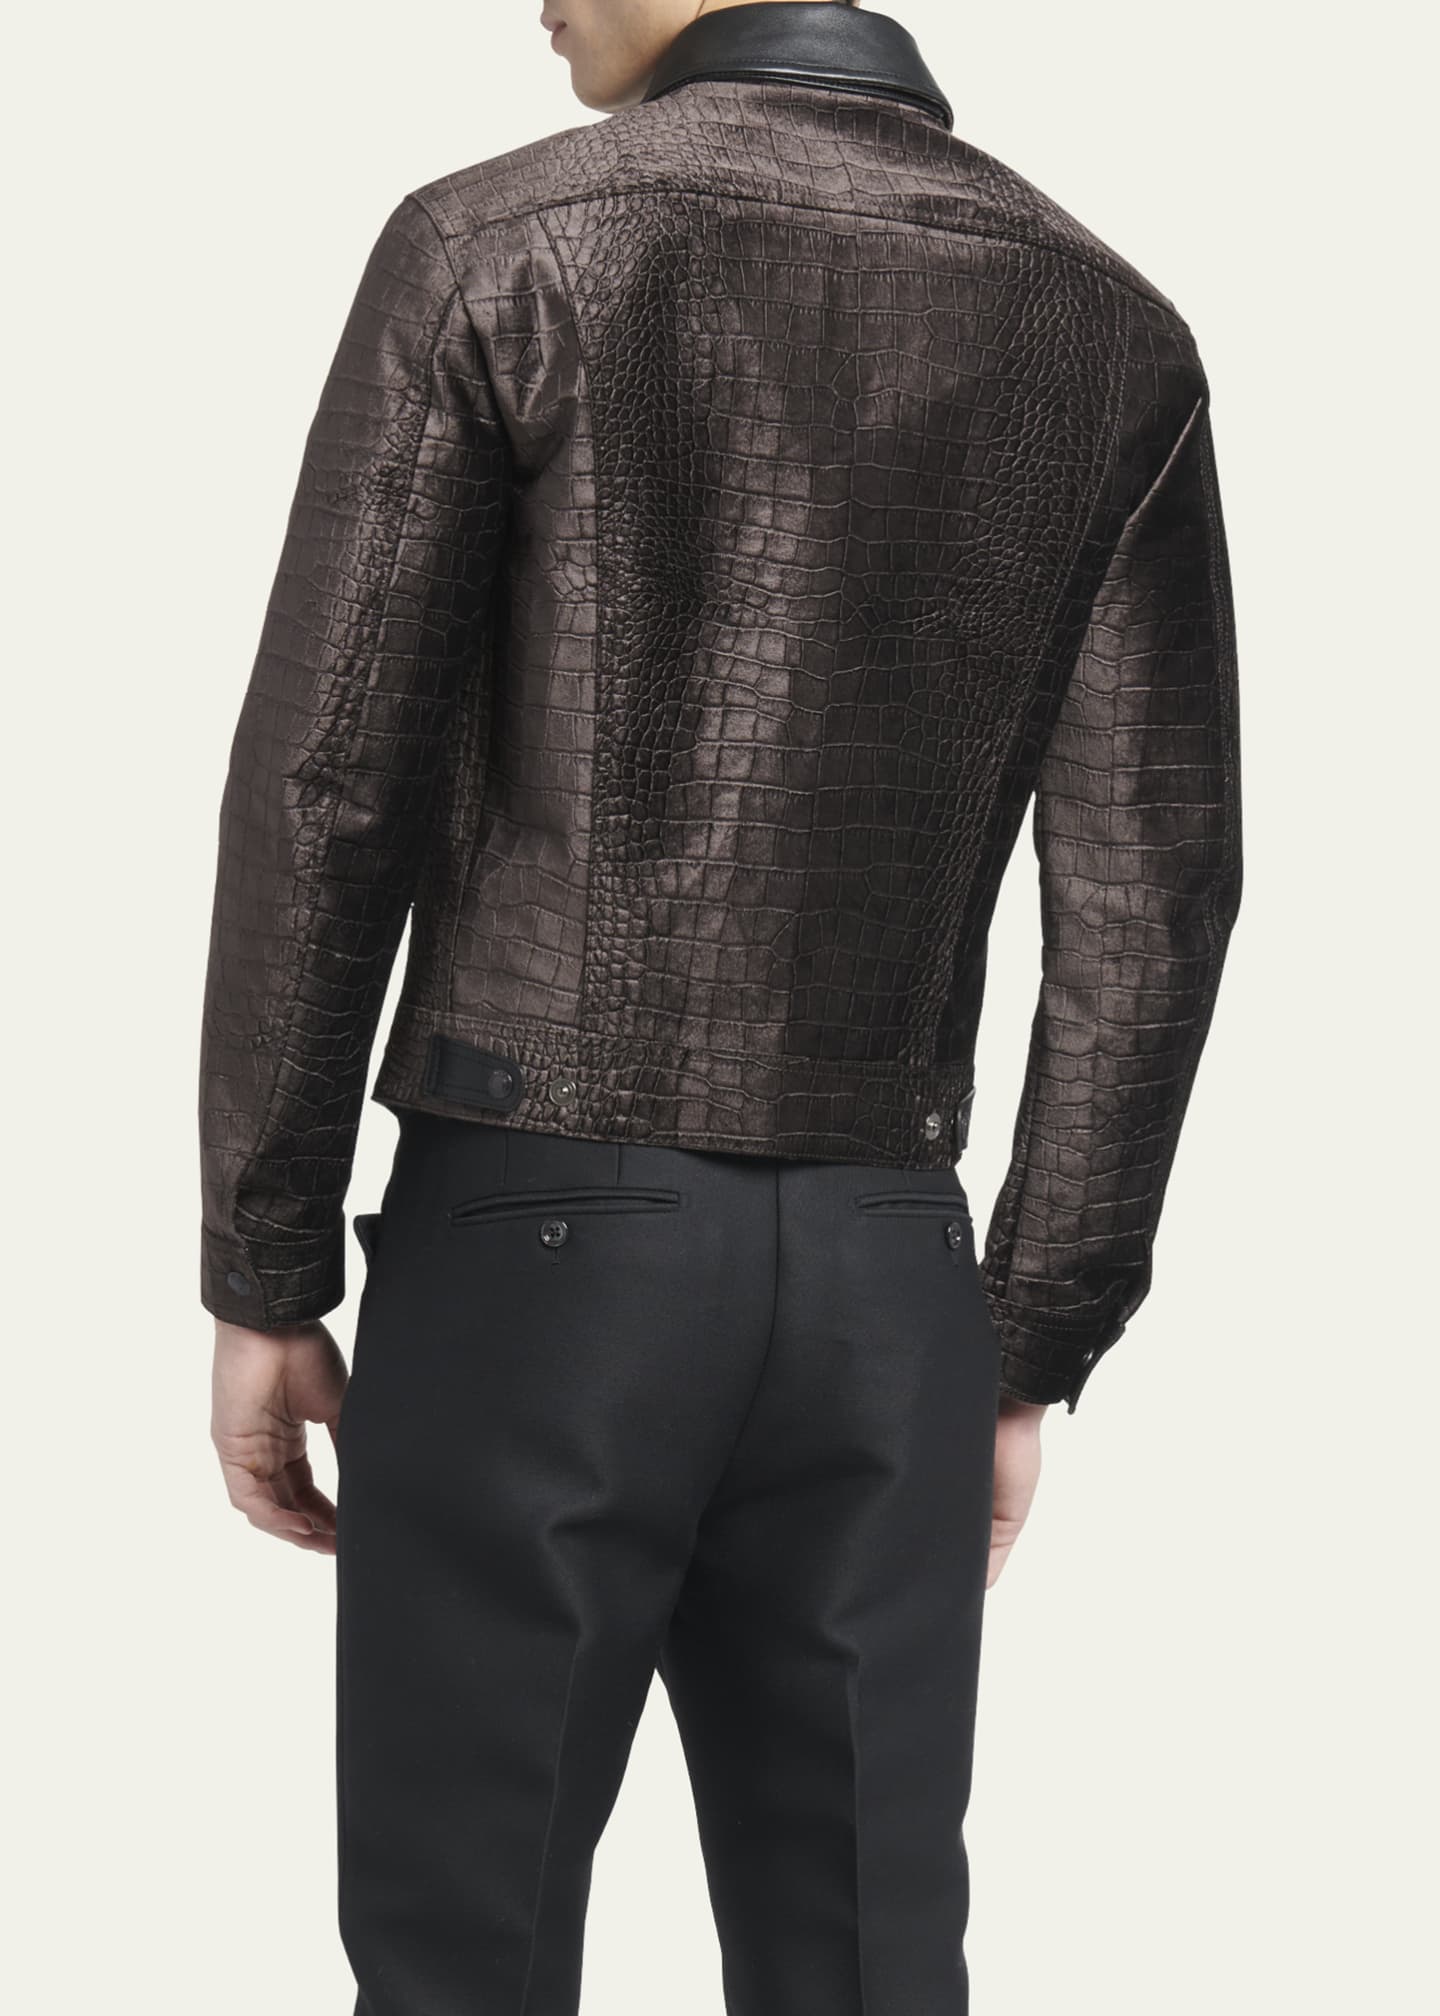 TOM FORD Crocodile-Embossed Leather Utility Jacket - Bergdorf Goodman